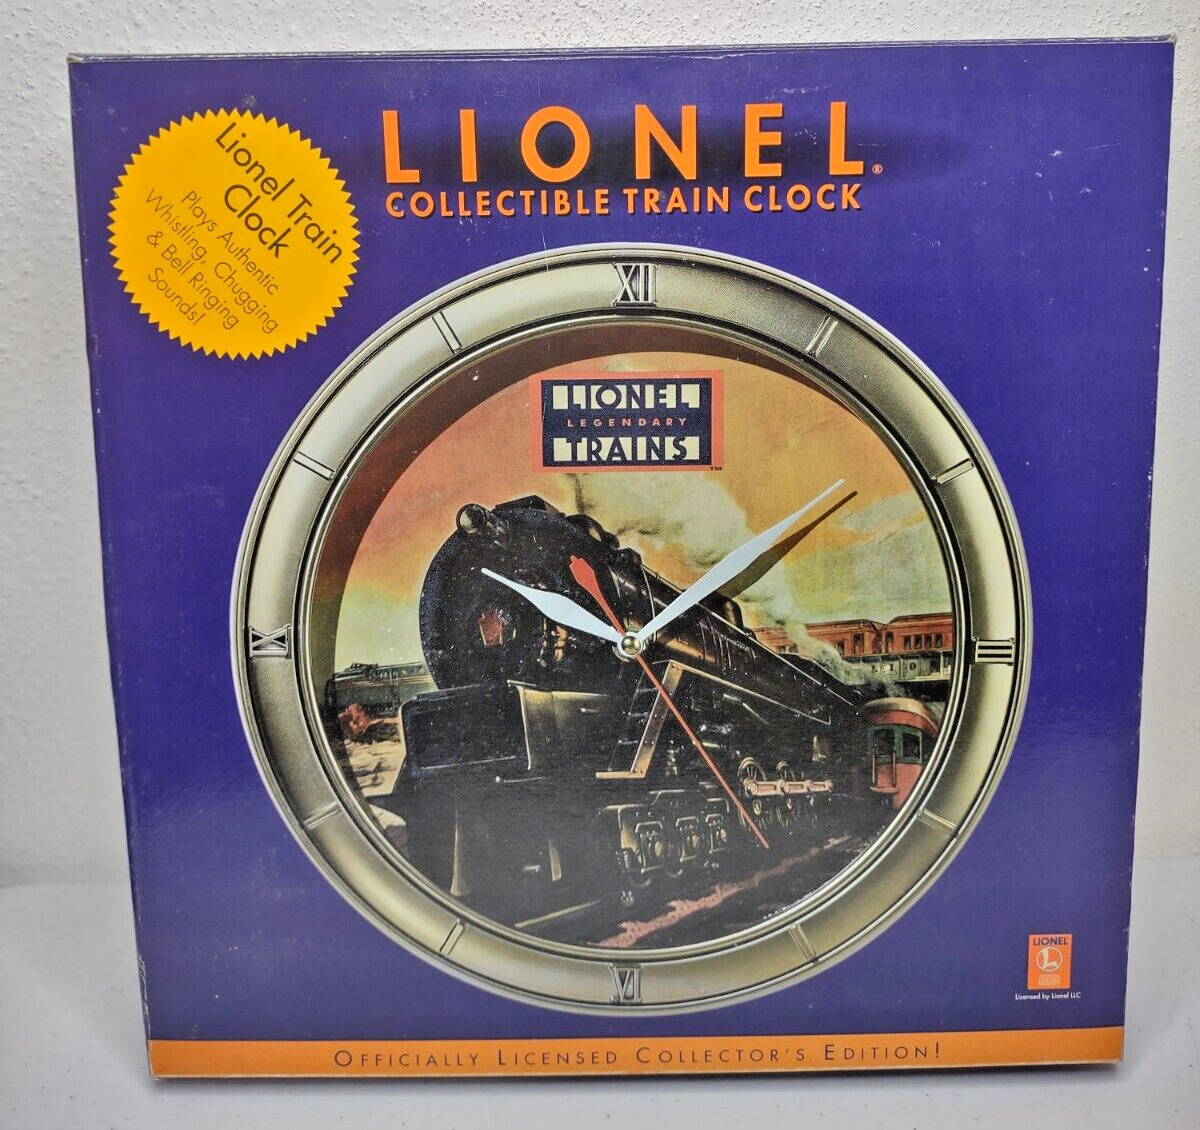 Collectable Lionel Train Analog Clock with Original Box SEE PIC READ DESCRIPTION